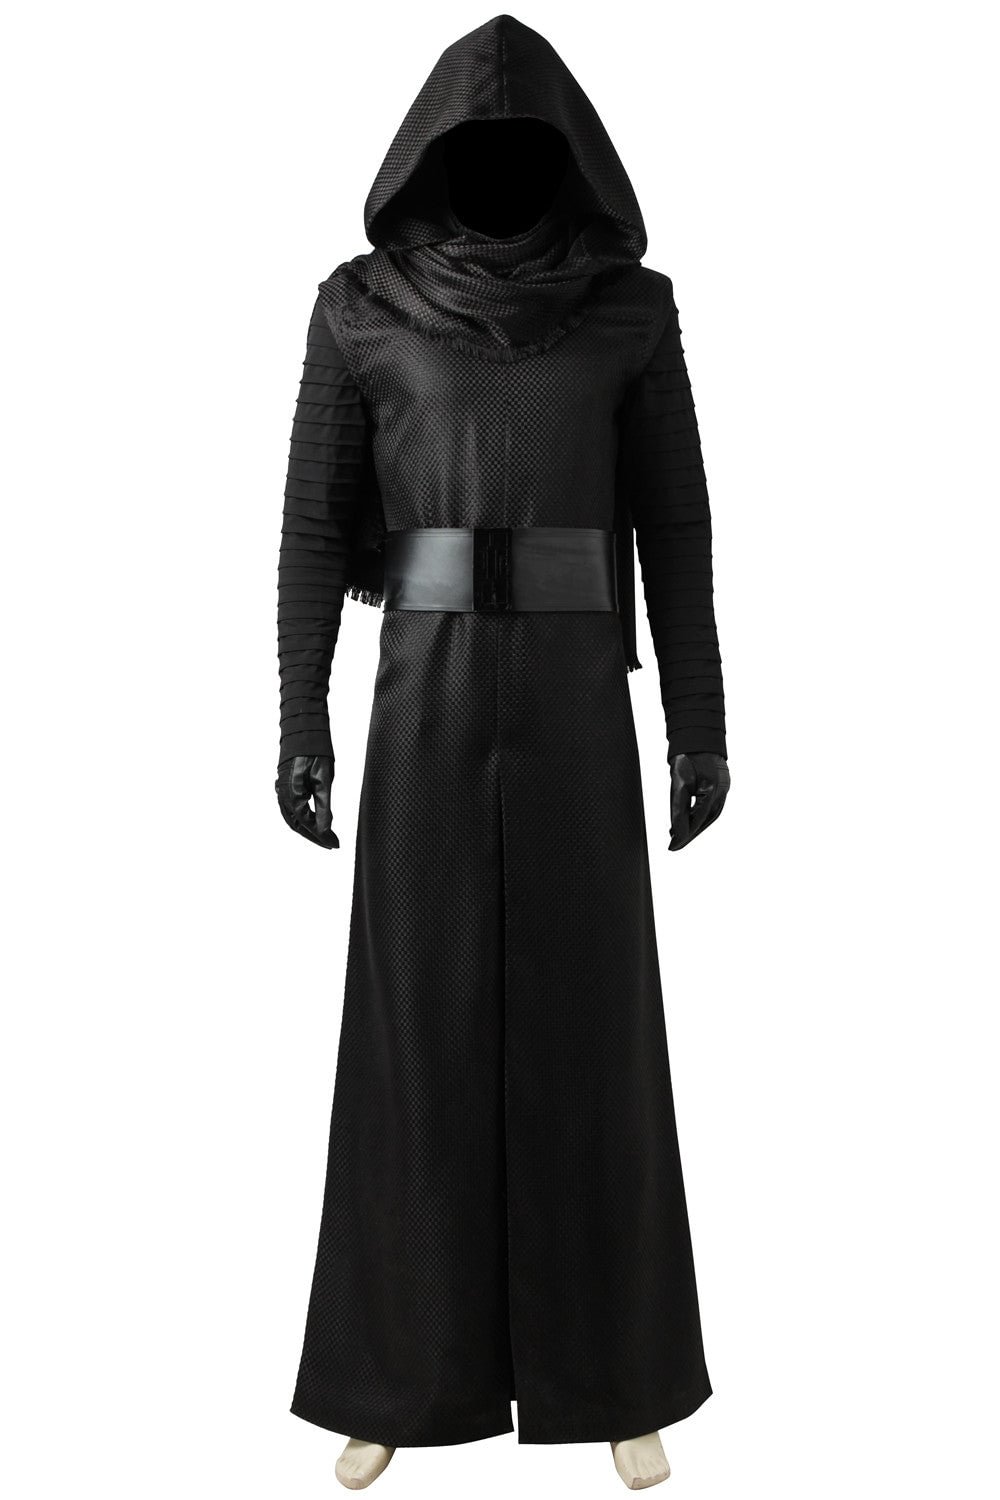 Star Wars VII: The Force Awakens Kylo Ren Black Cosplay Costume